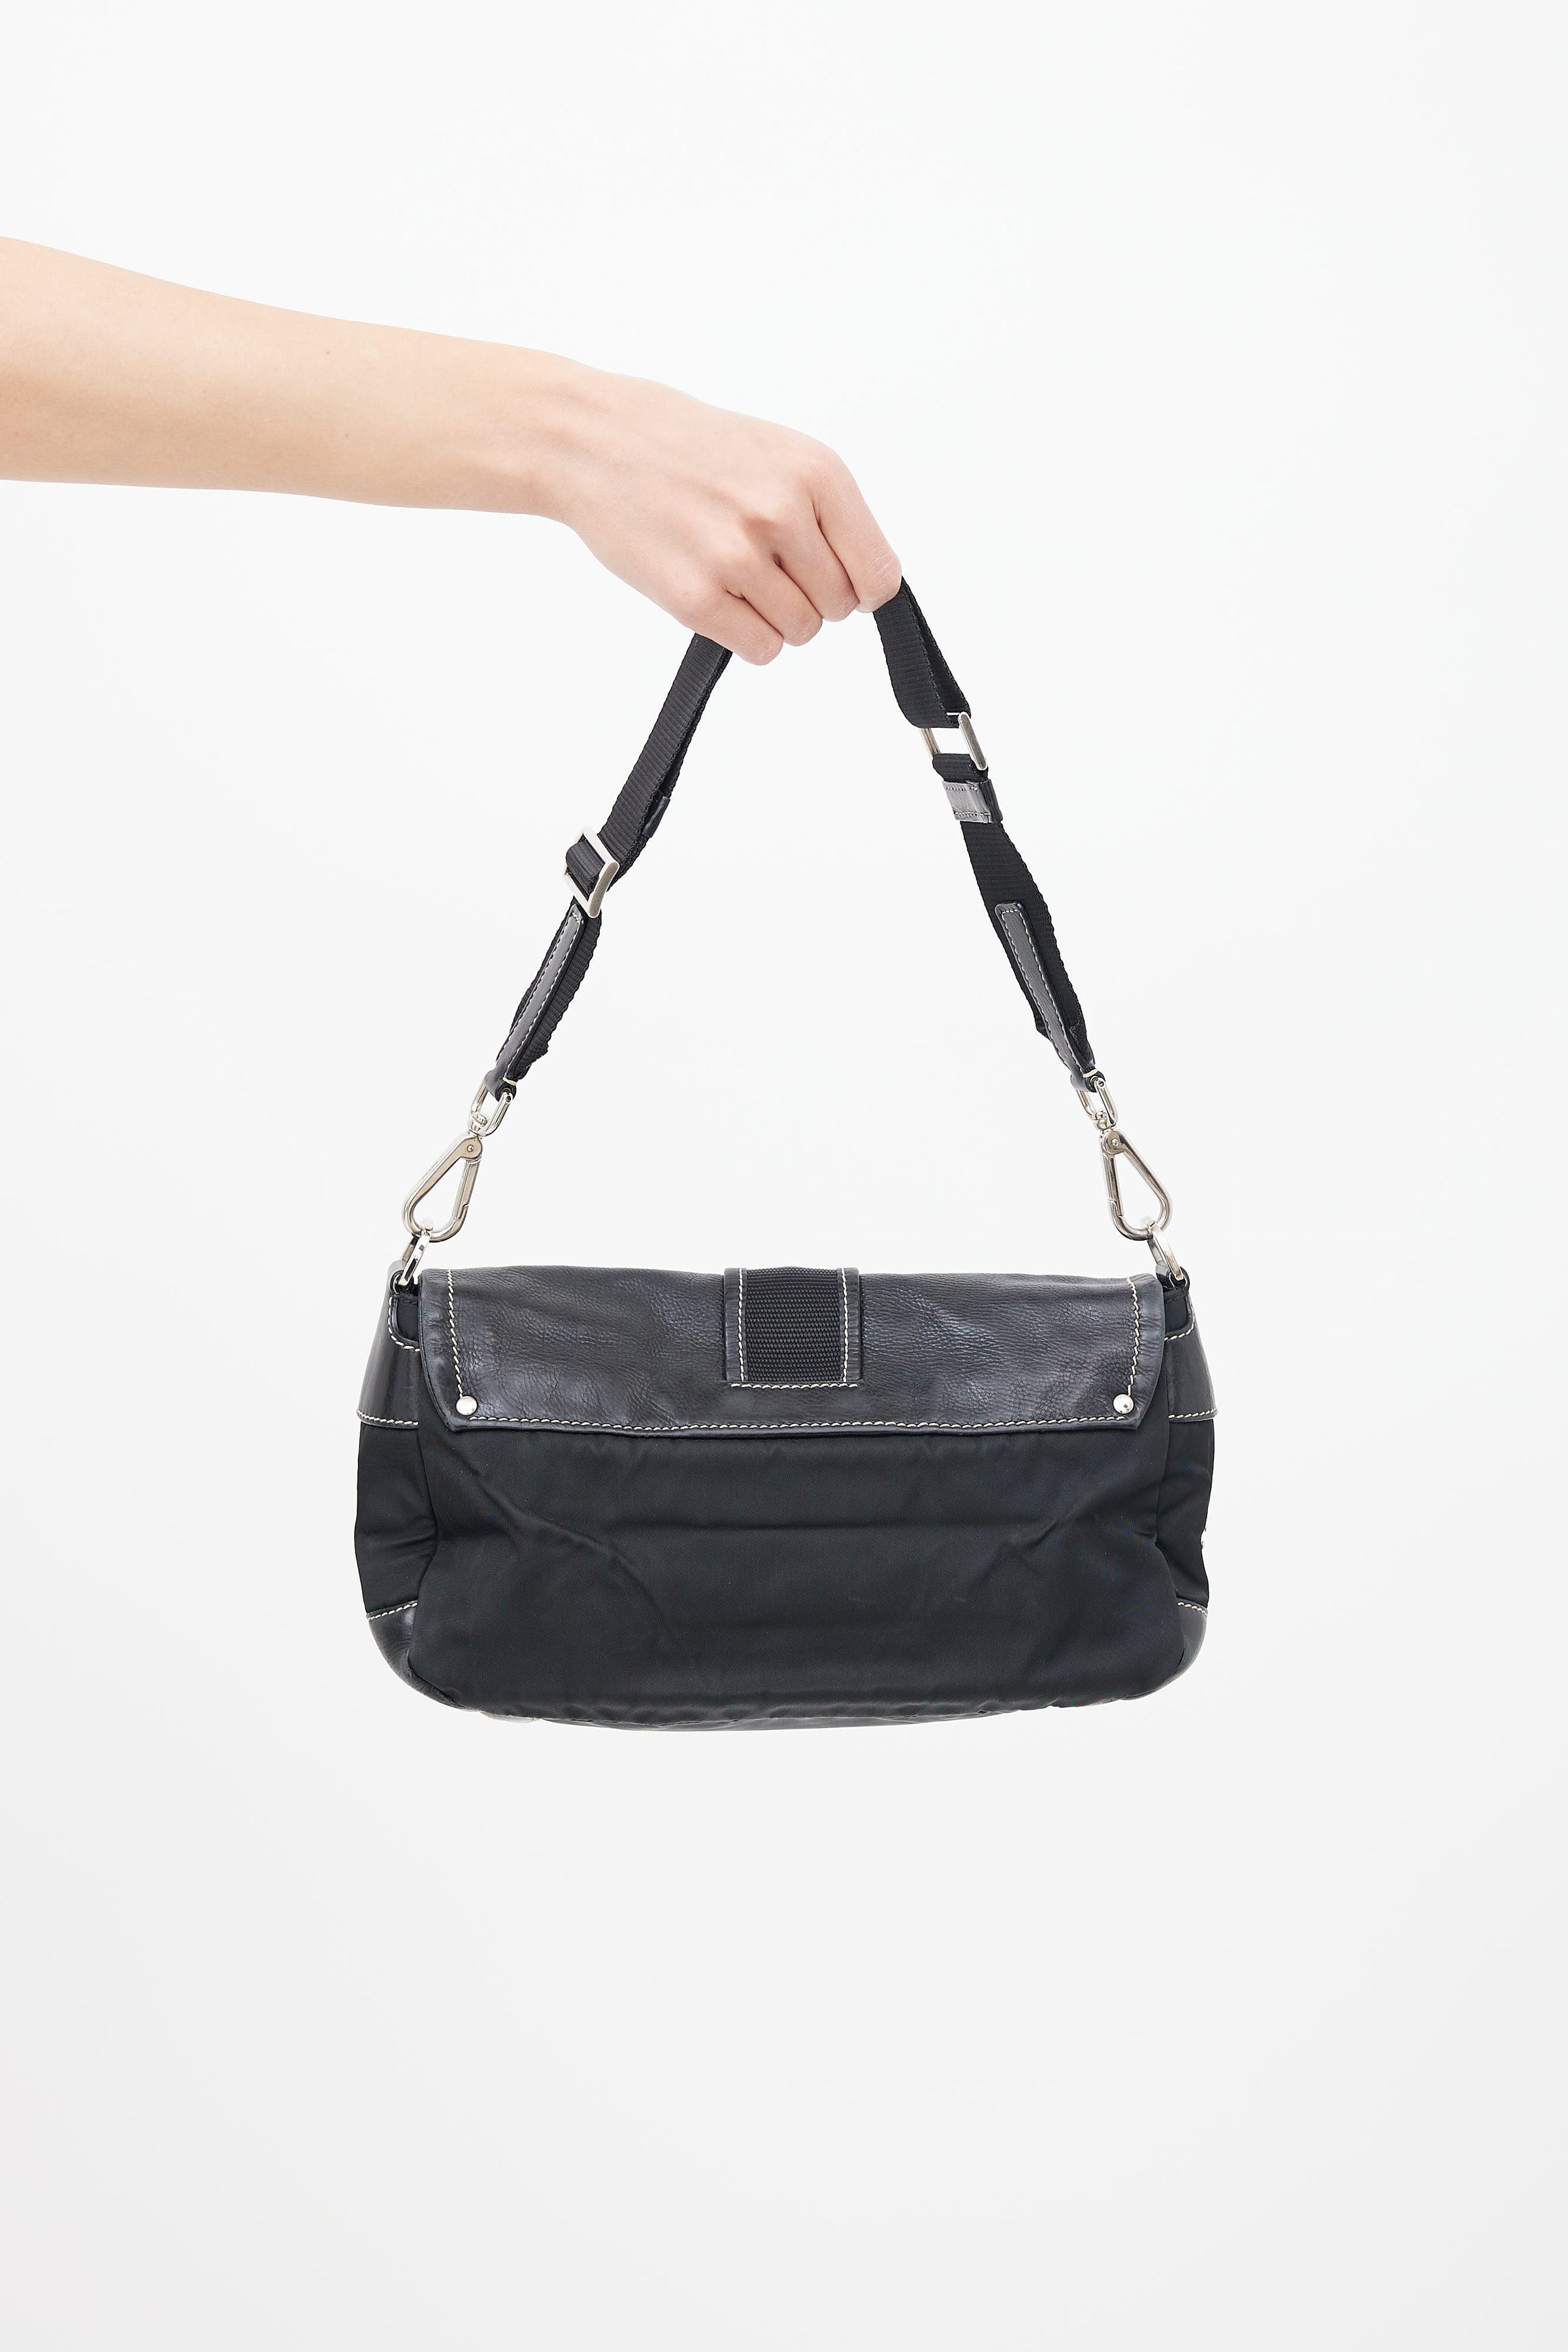 PRADA Black Nylon and Leather Hobo Bag - Amazing Condition!